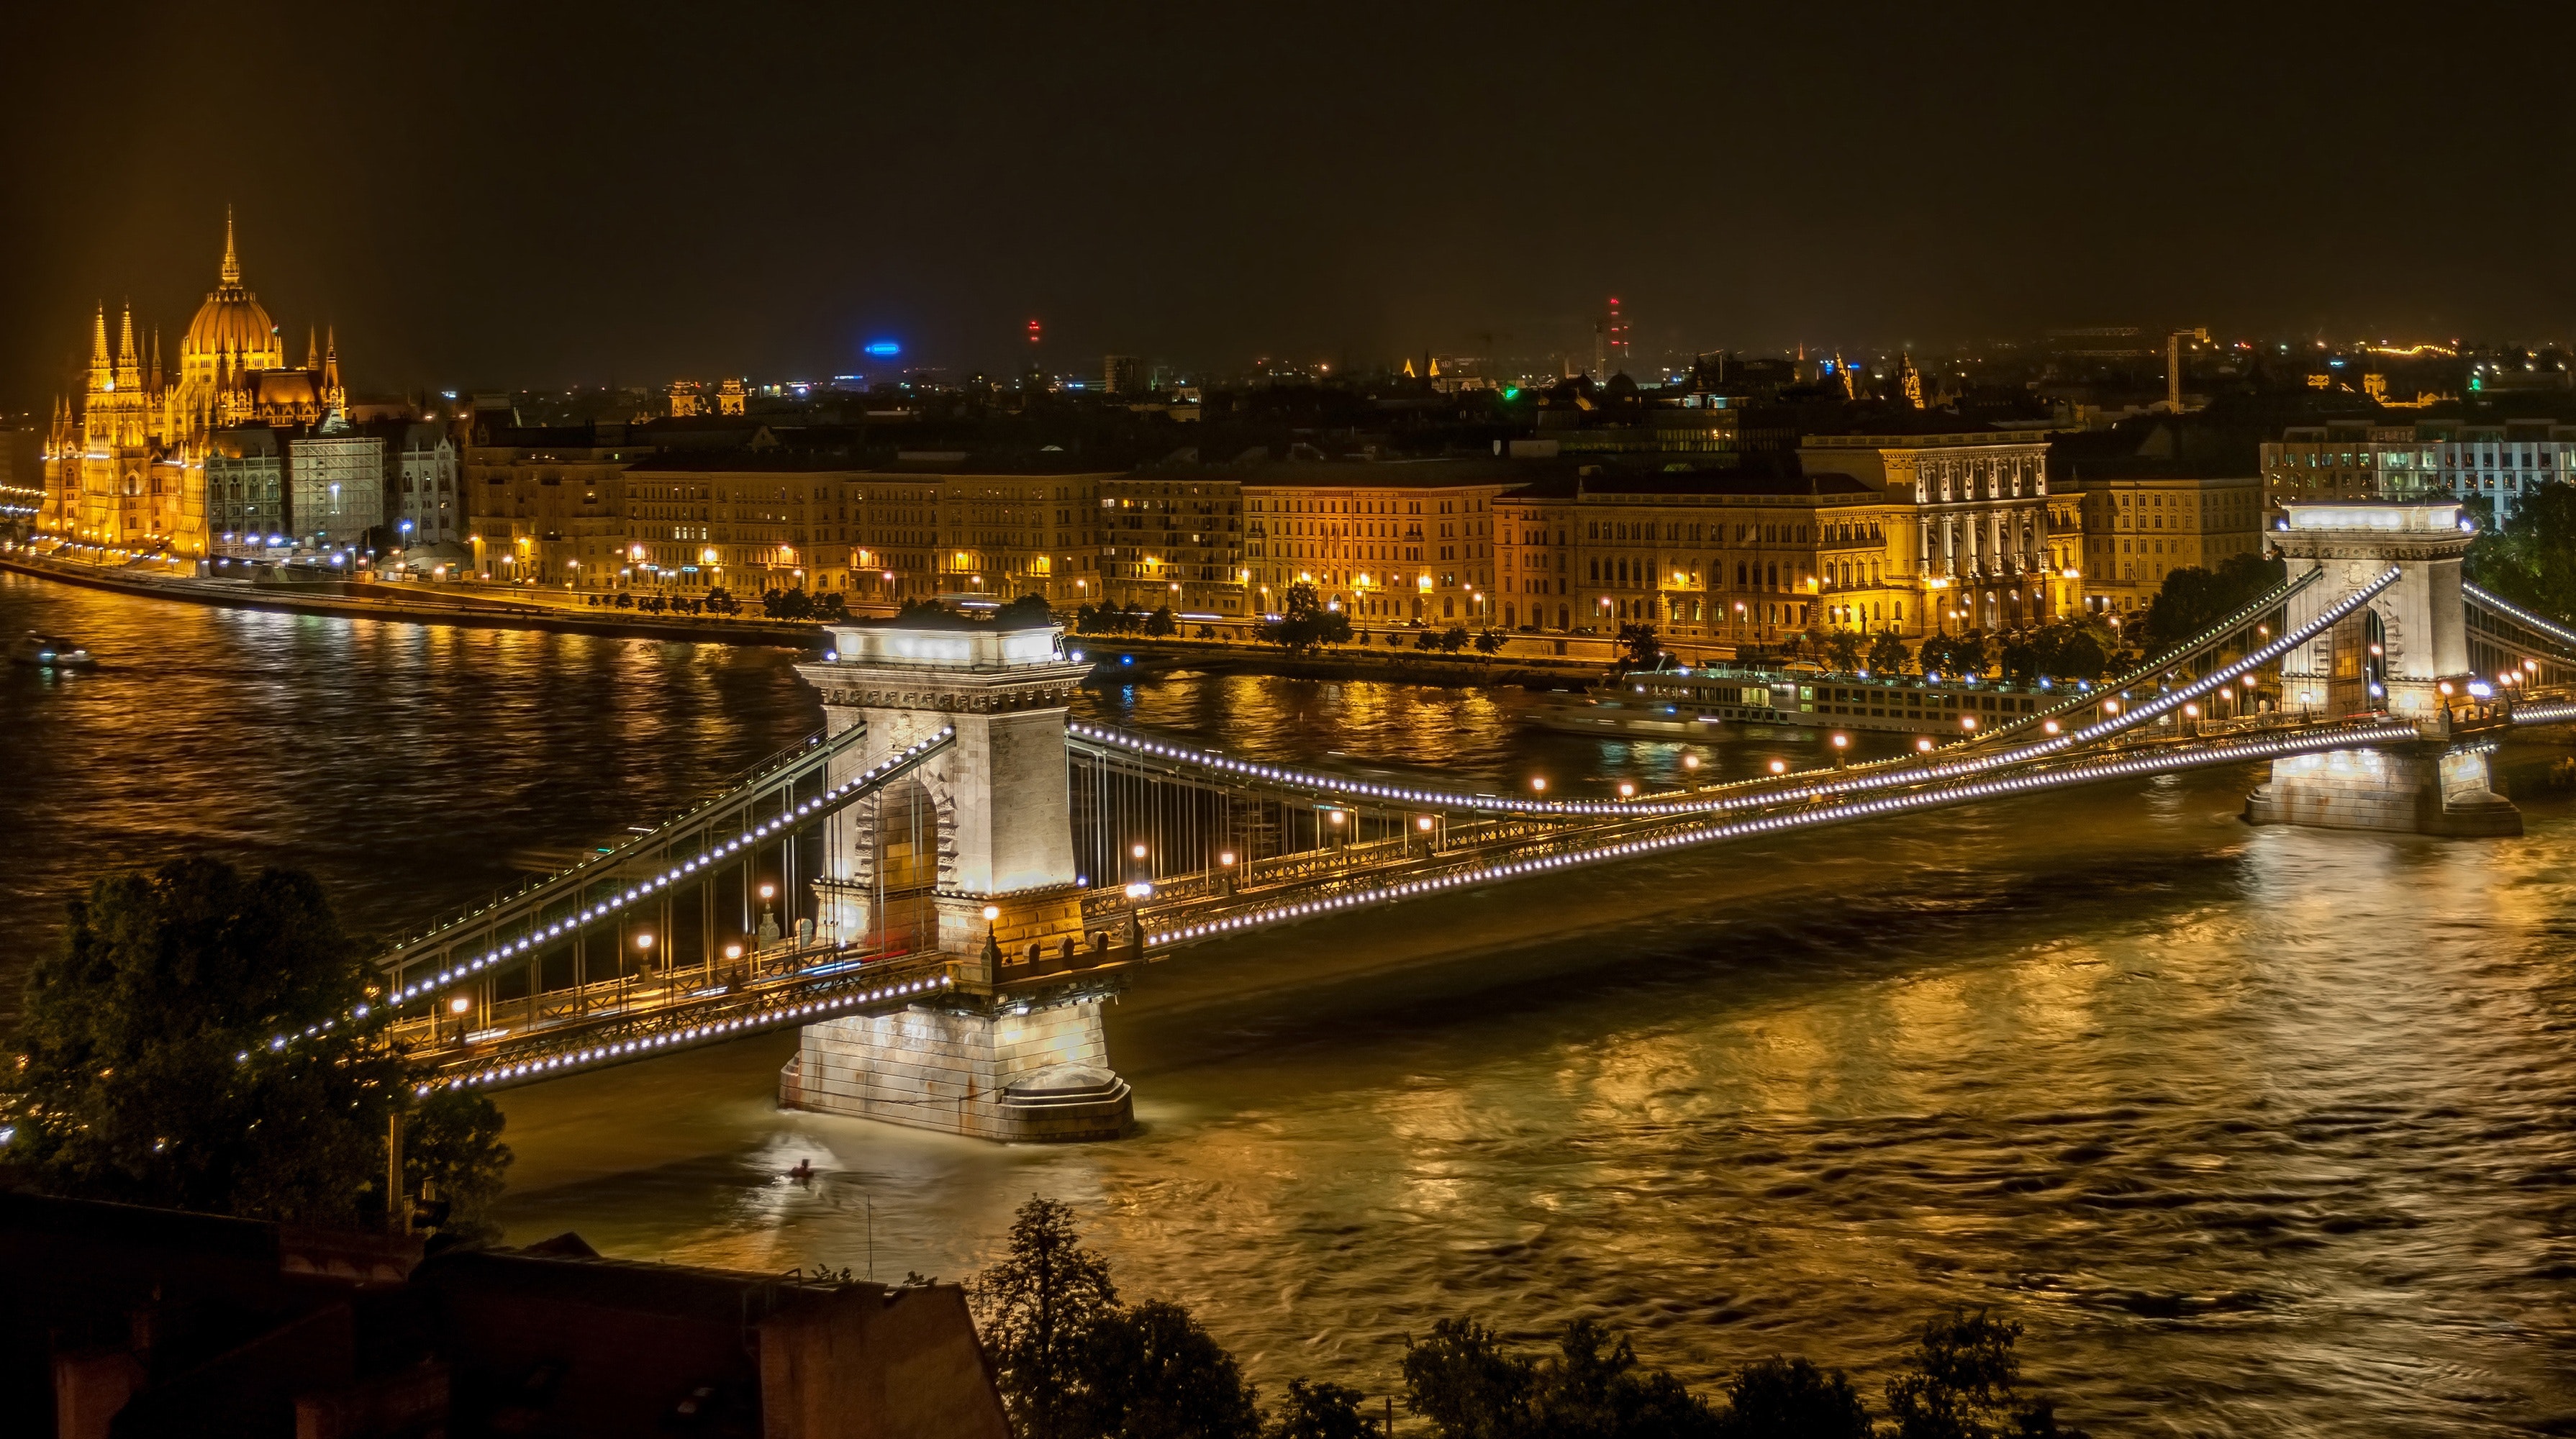 Lighted bridge during night time photo